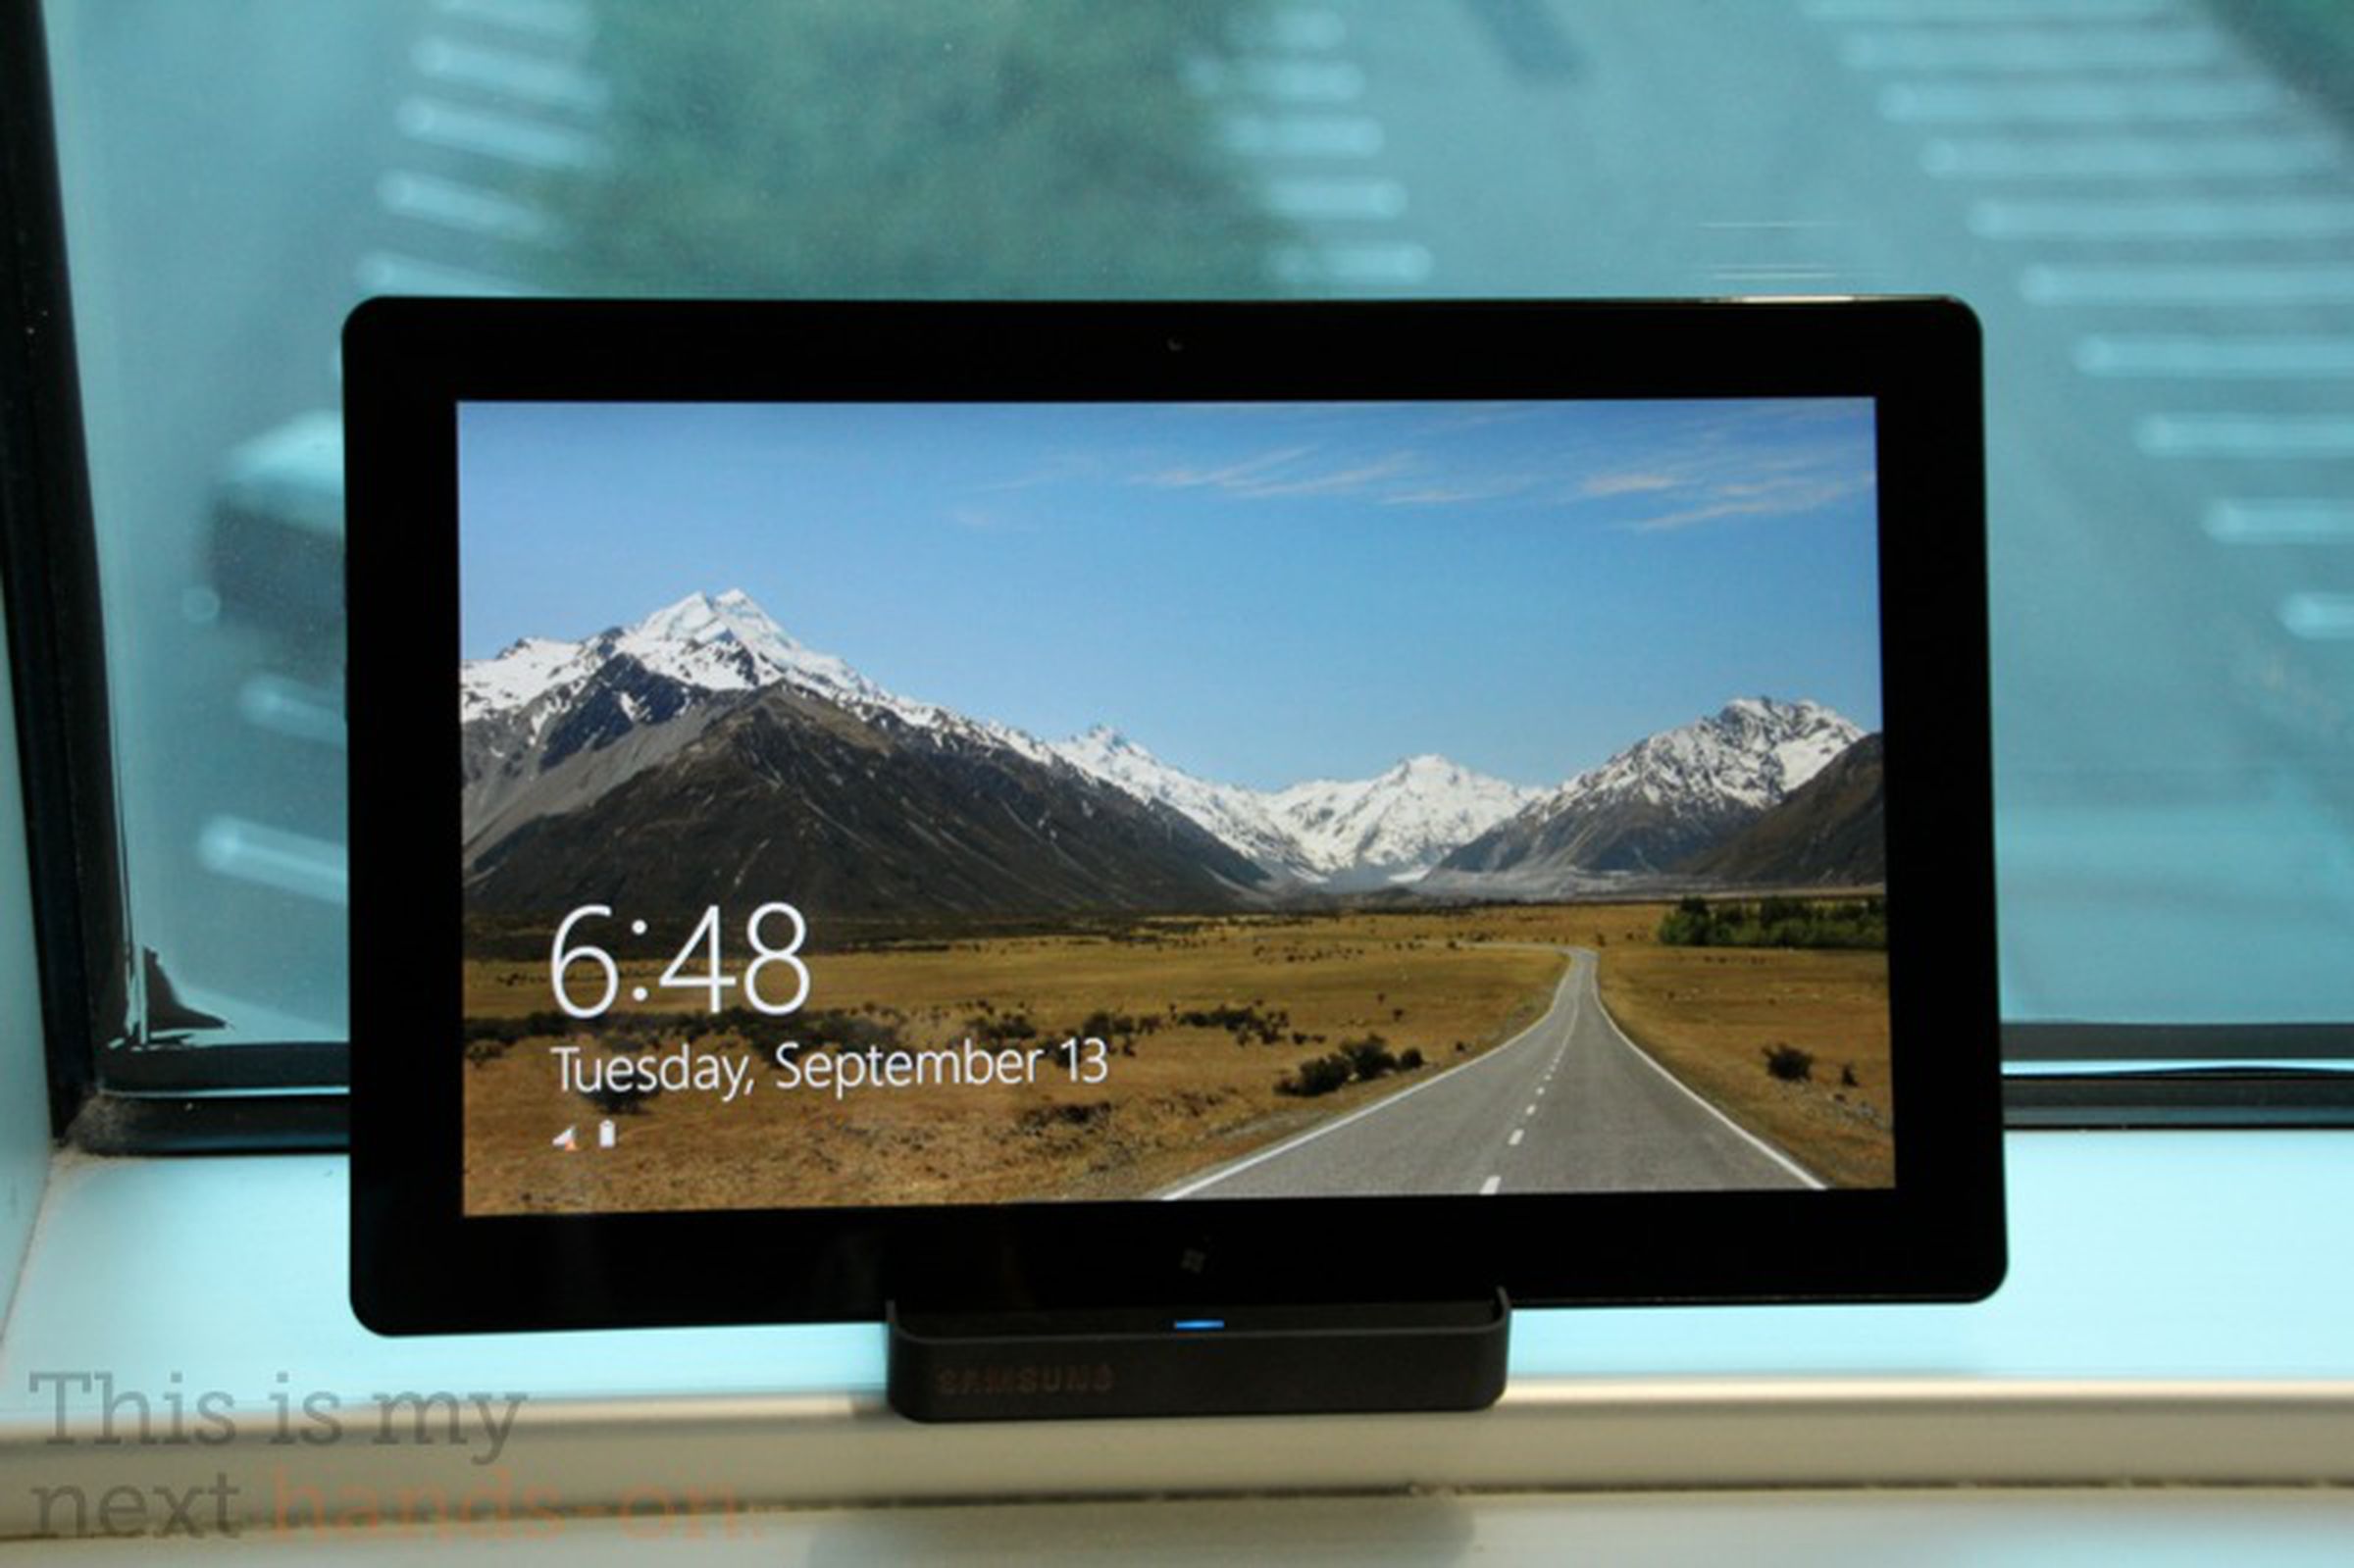 Windows 8 interface photos